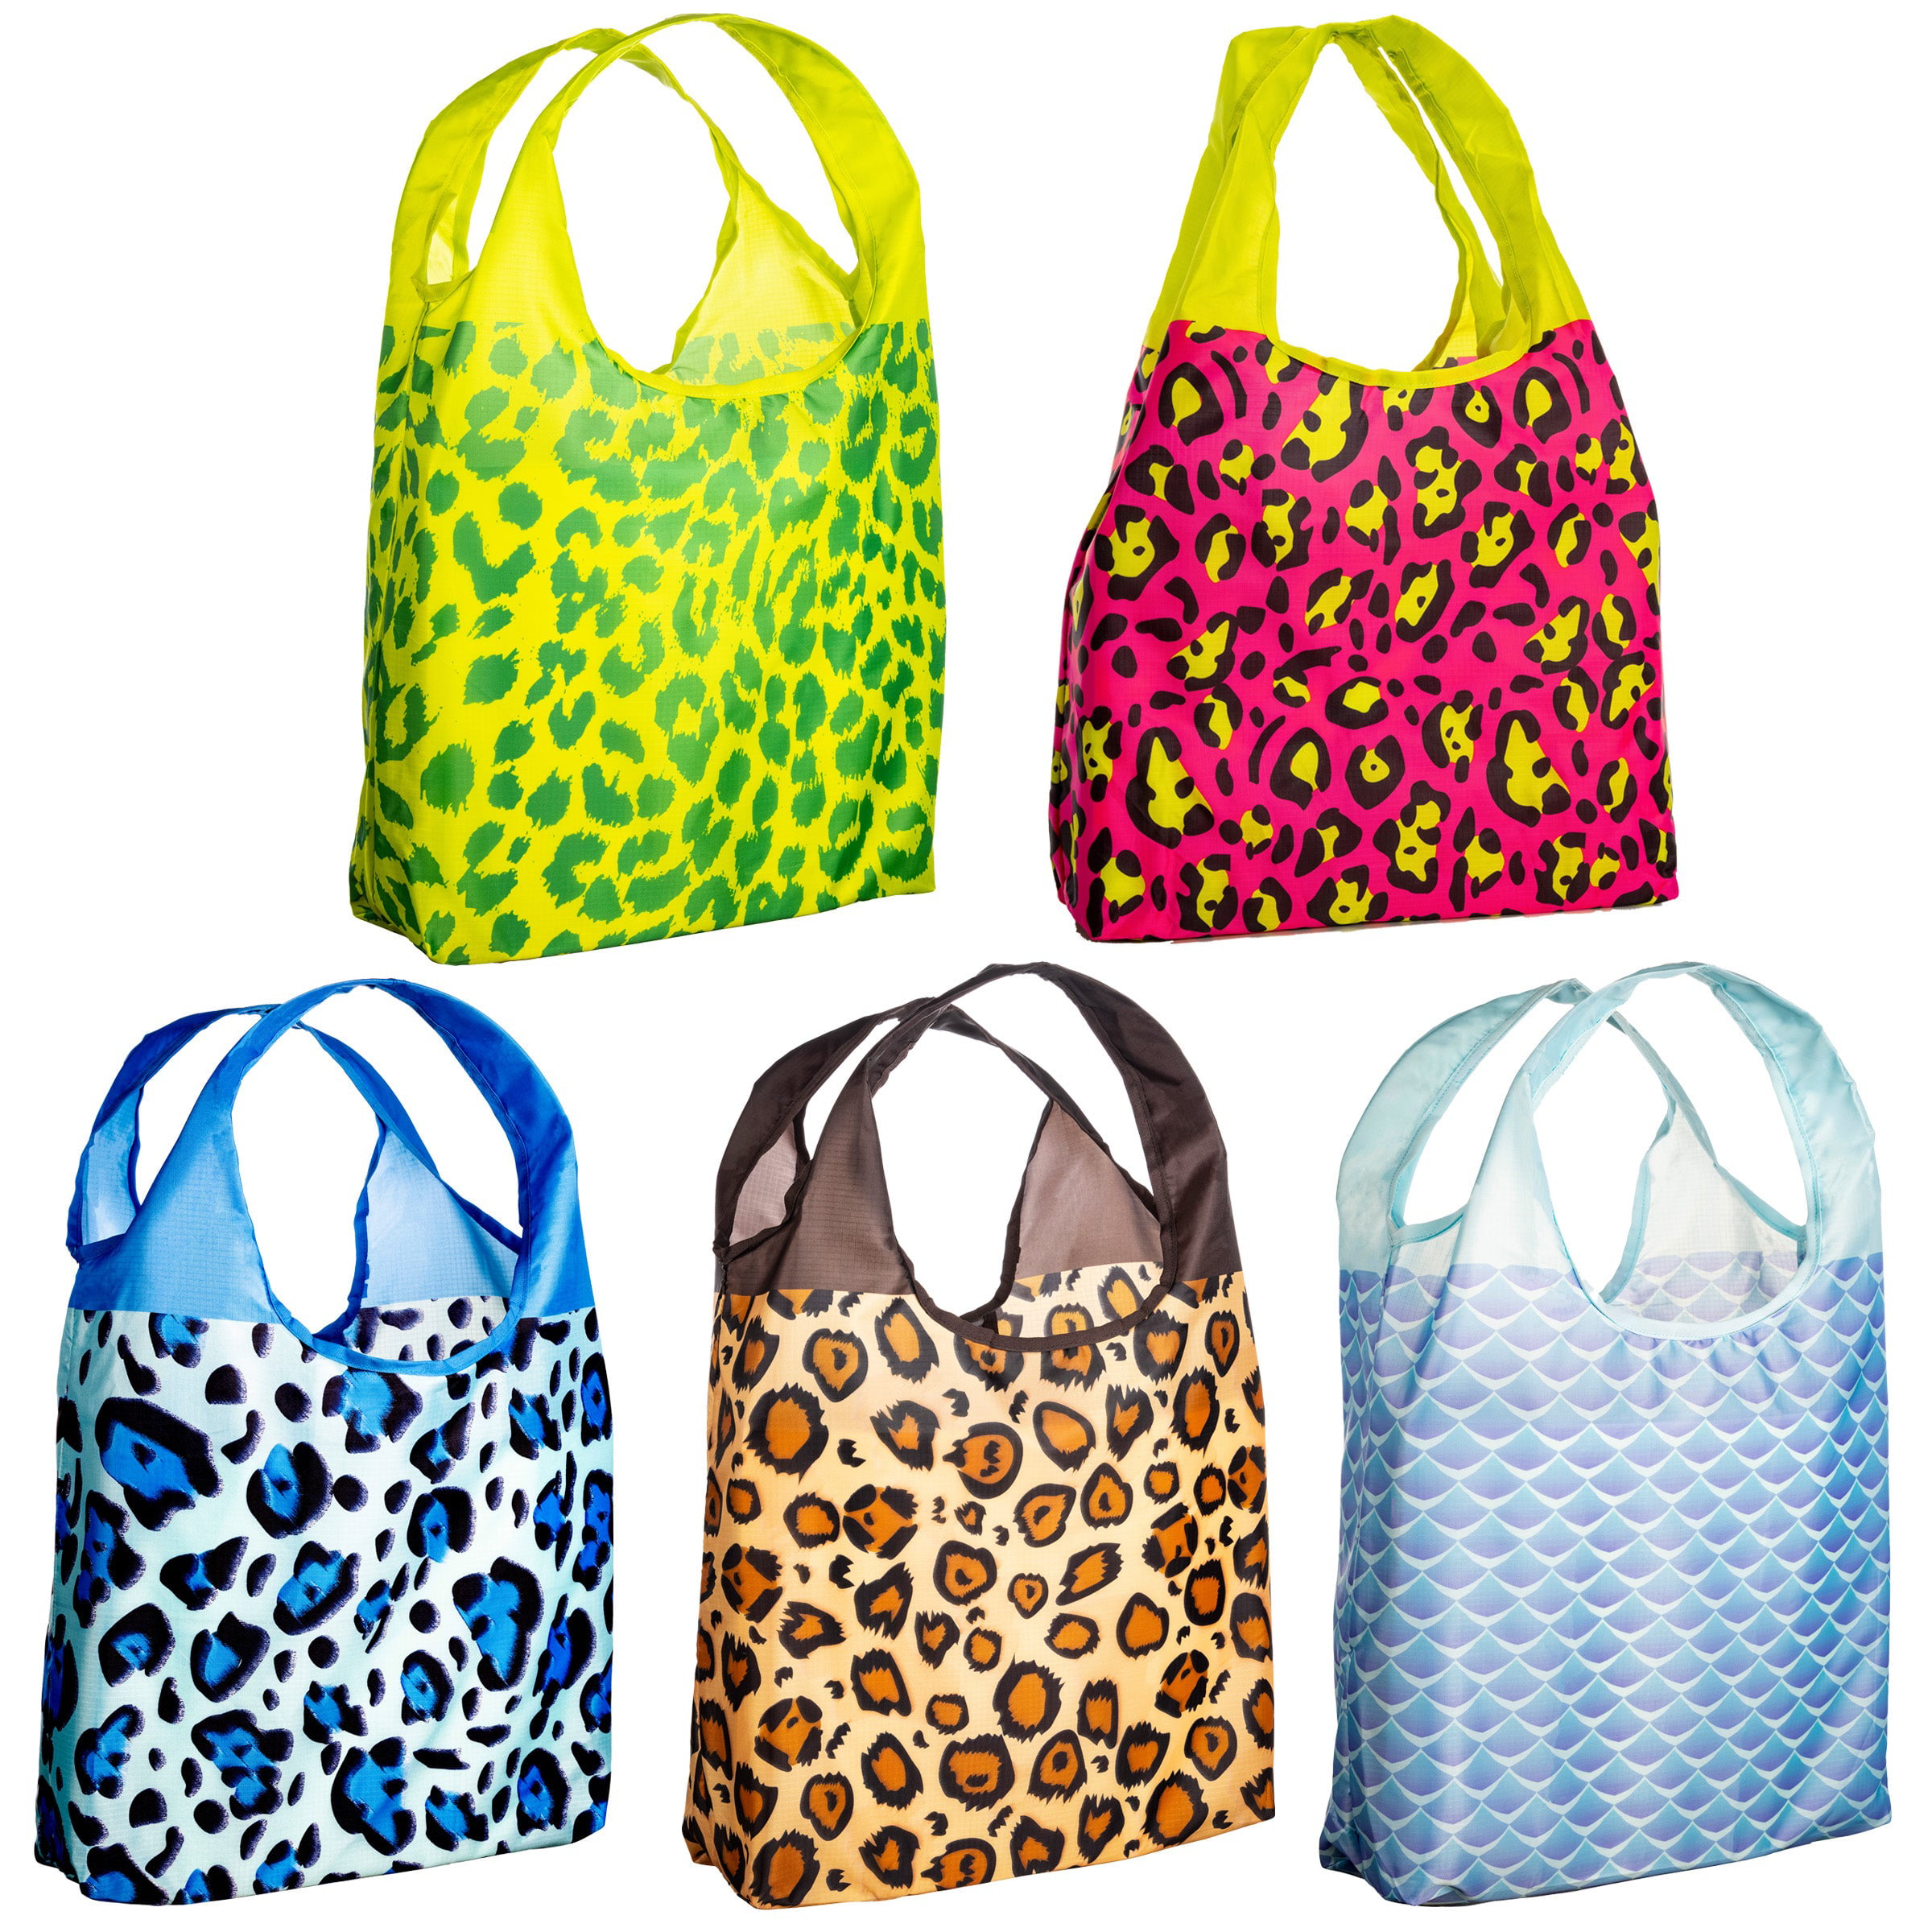 O-WITZ 5-Pack Reusable Shopping Bags Cheetah & Fish Prints - Walmart.com